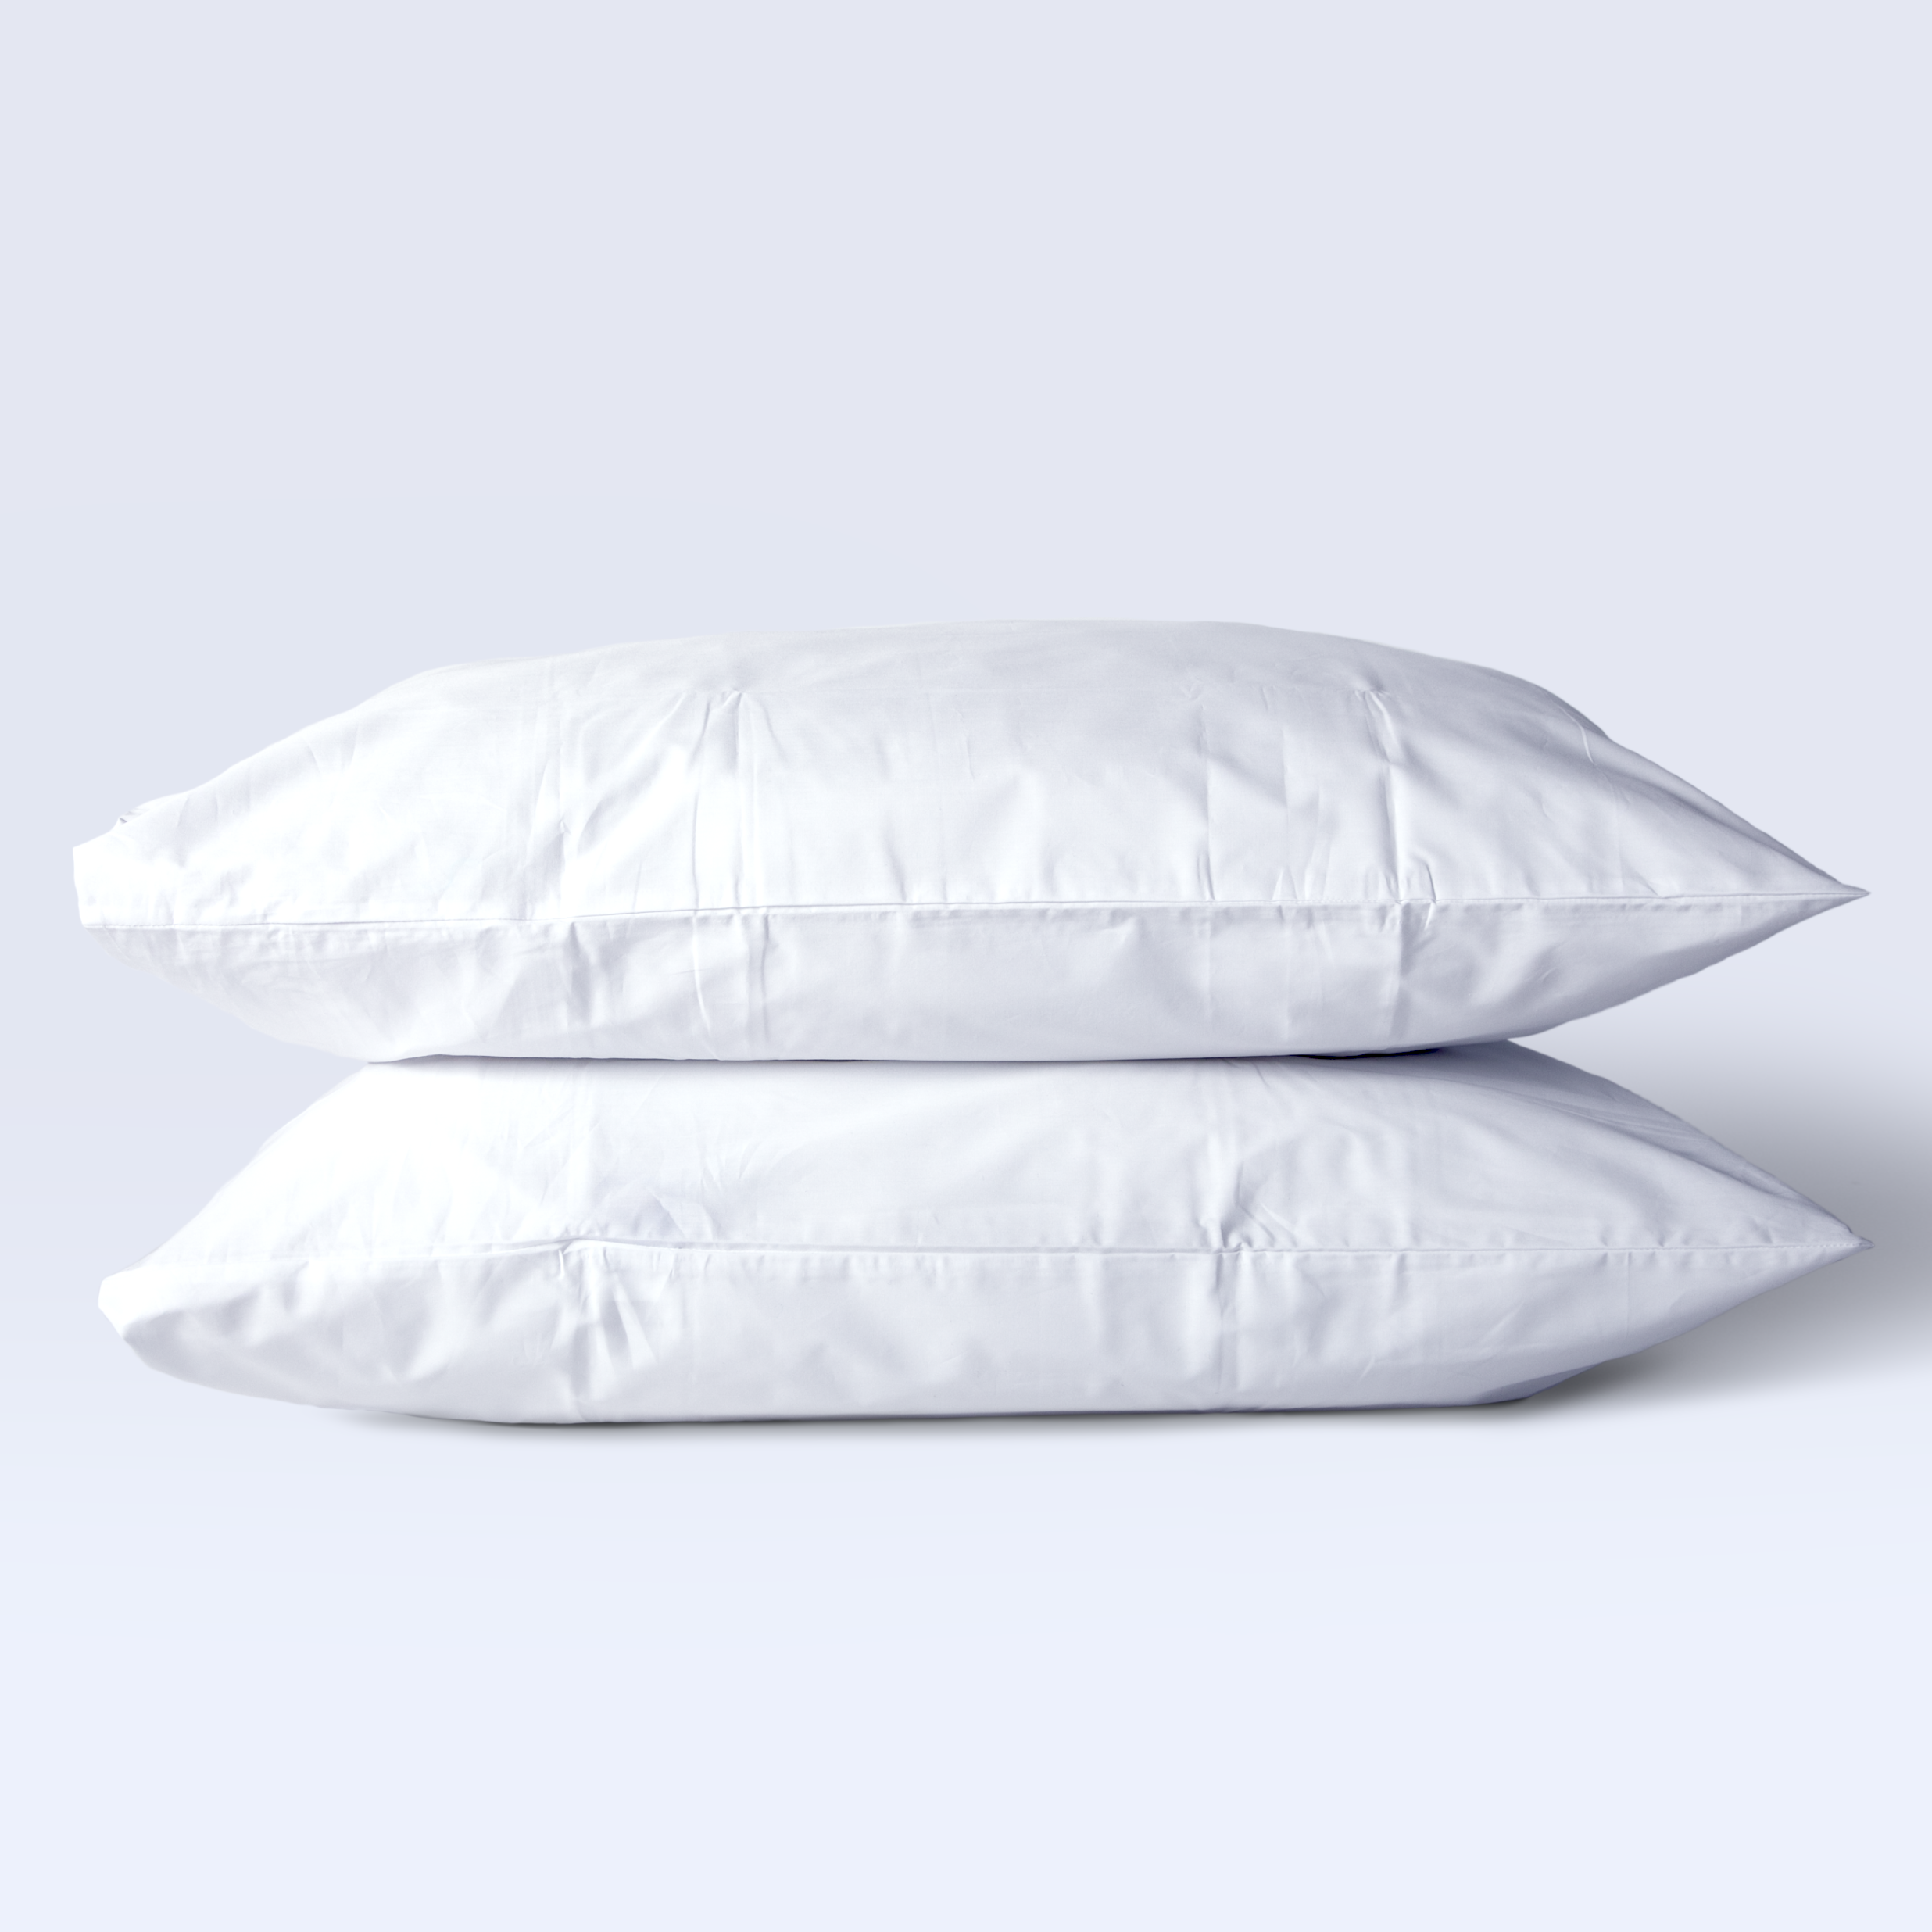 Funda de almohada de percal 100% algodon 200 hilos Color Blanco Talla  almohada 40x70